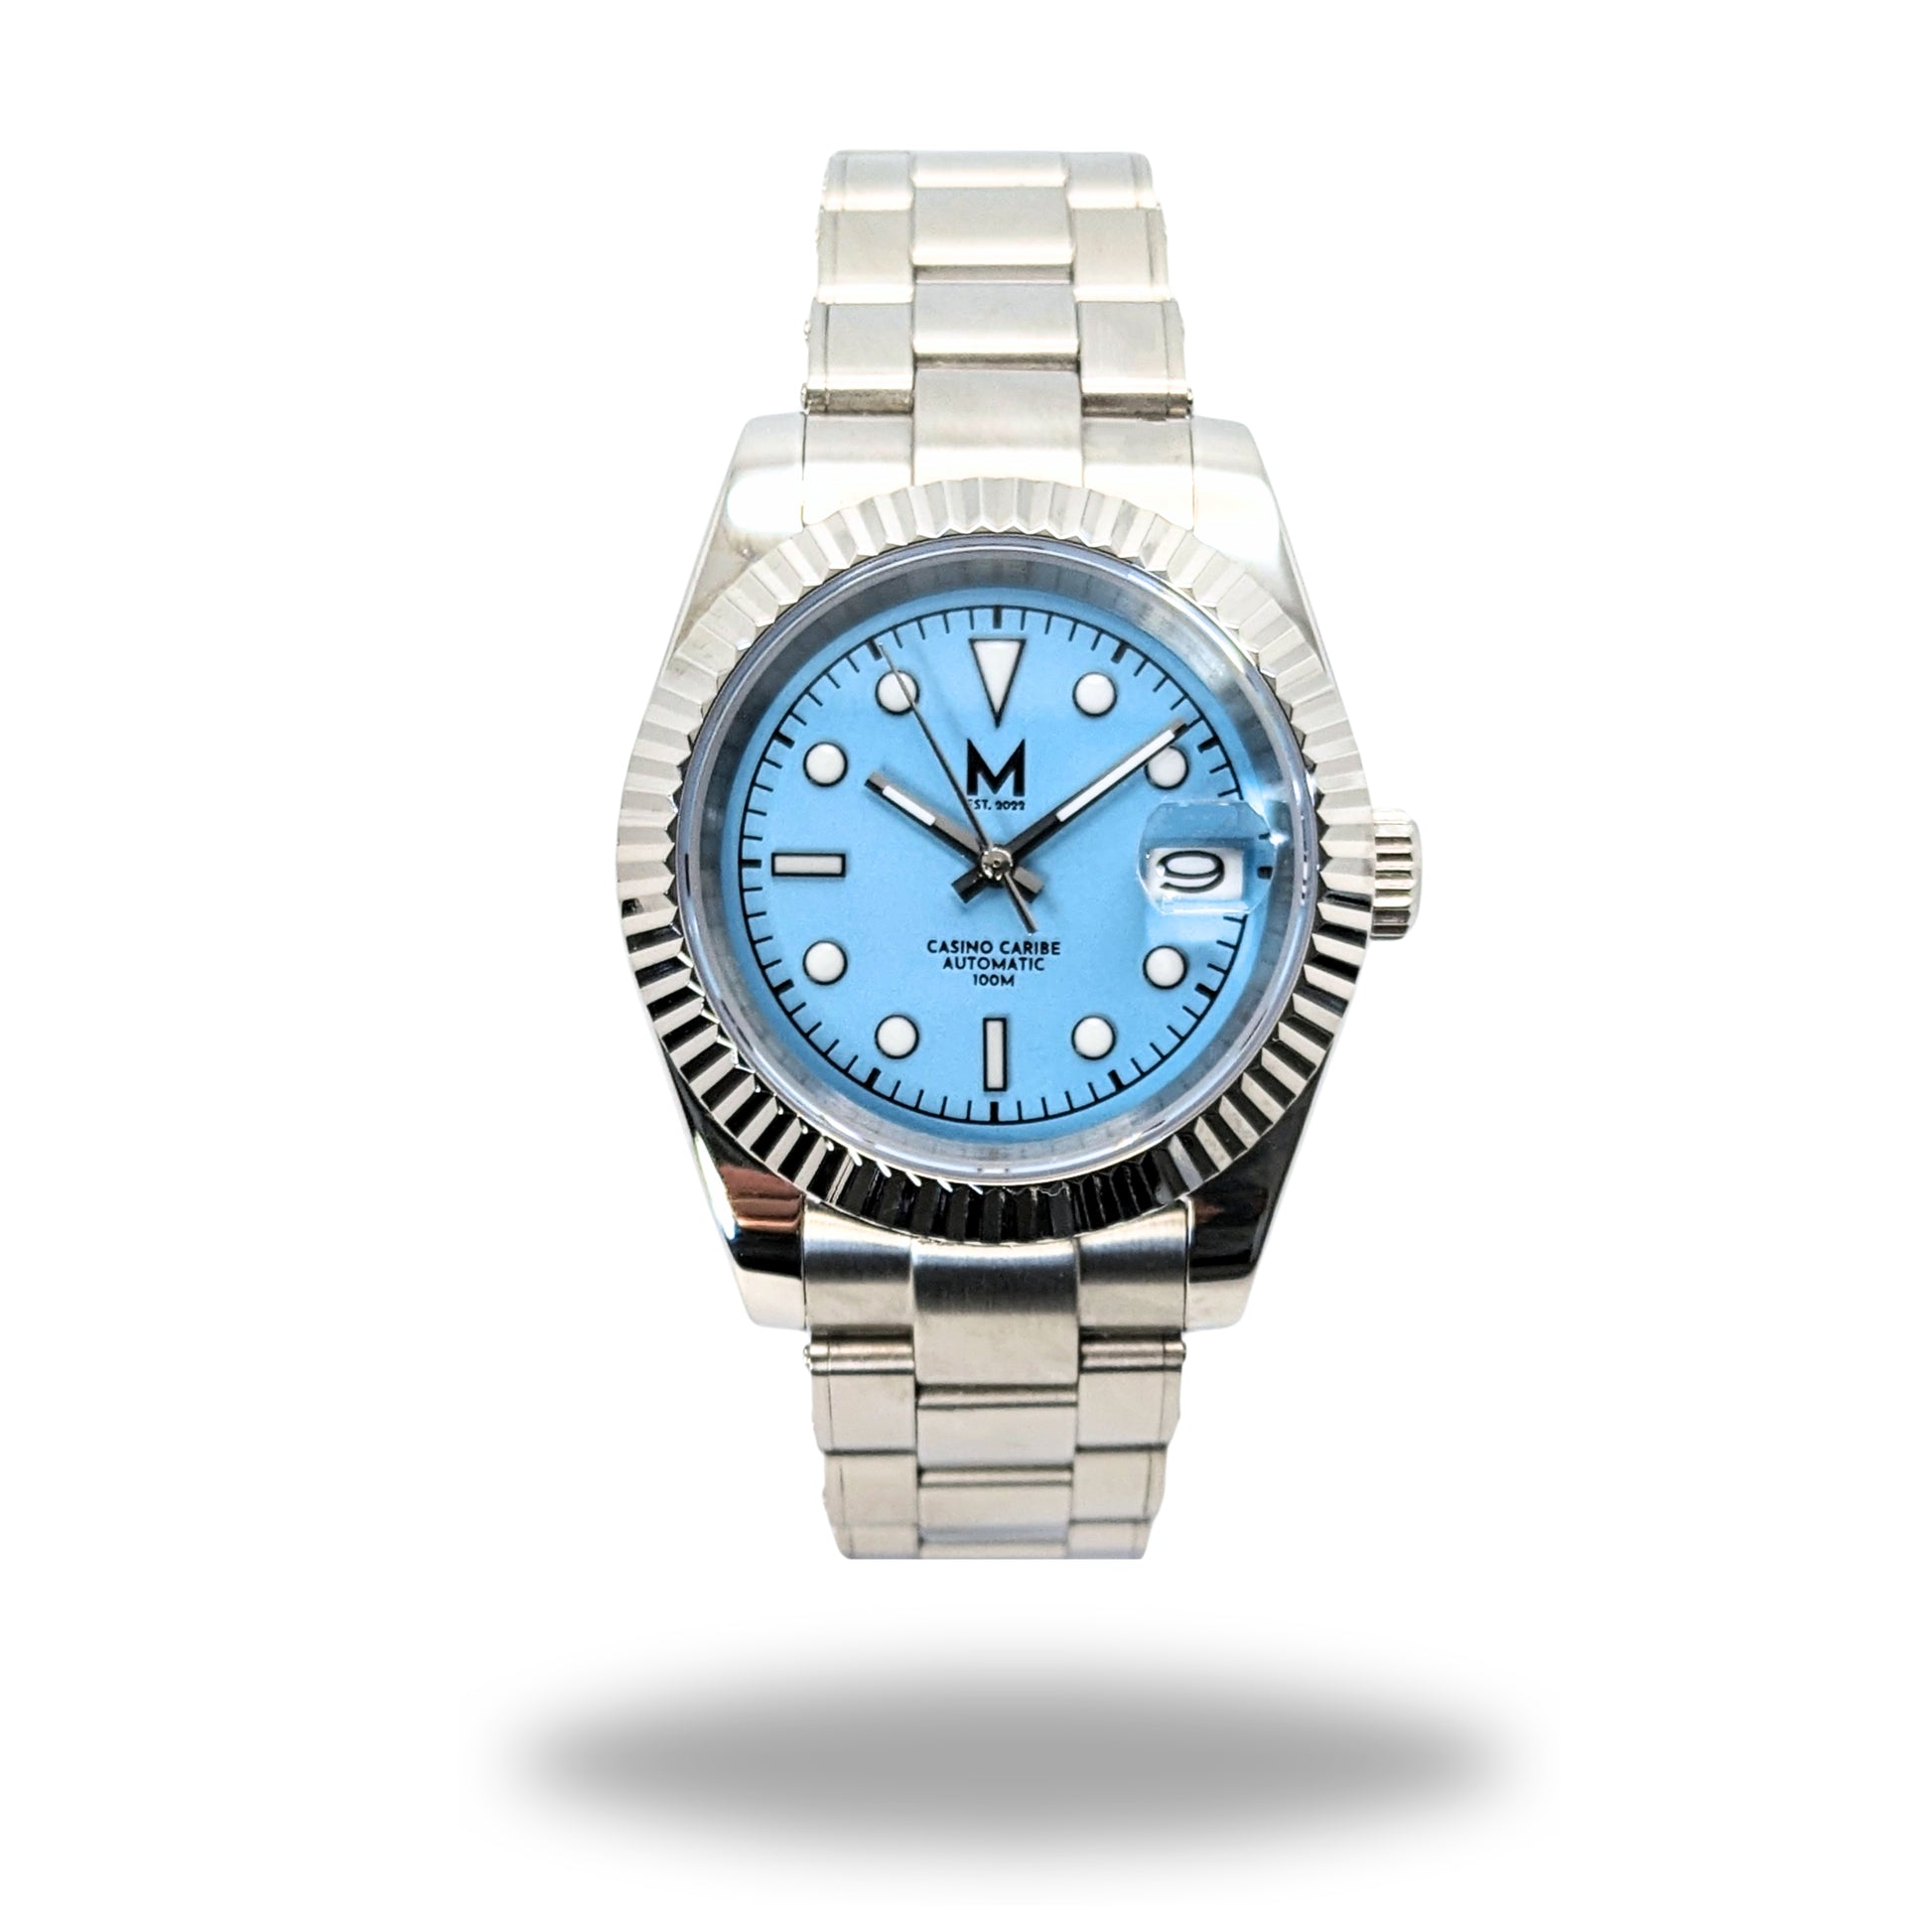 Monterey Watch Co: The Casino Caribe Classic Watch 